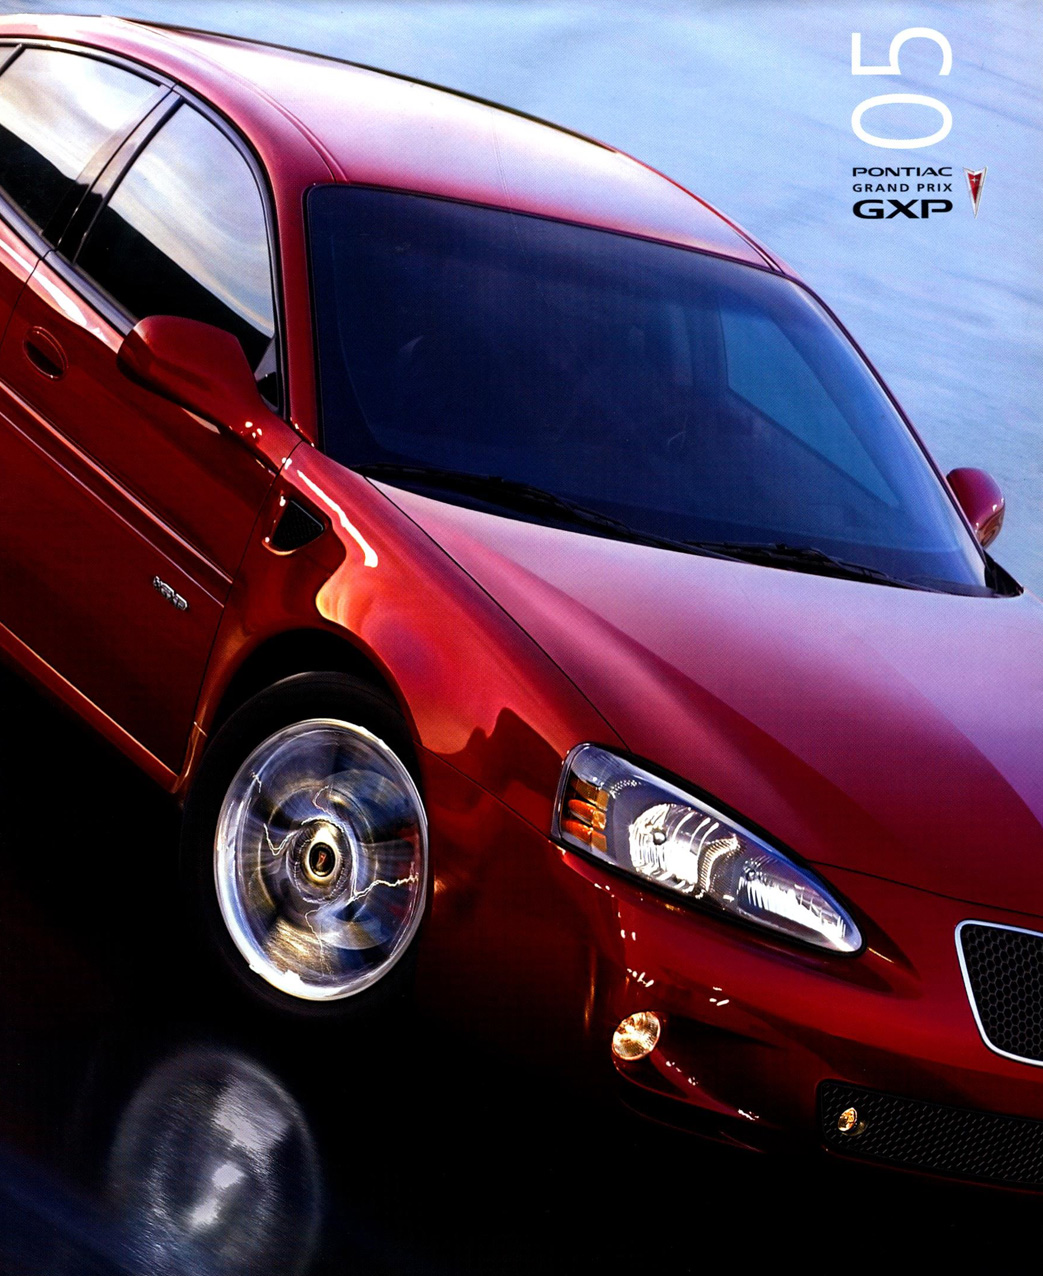 2005 Pontiac Grand Prix GXP GTO Poster Sales Brochure 